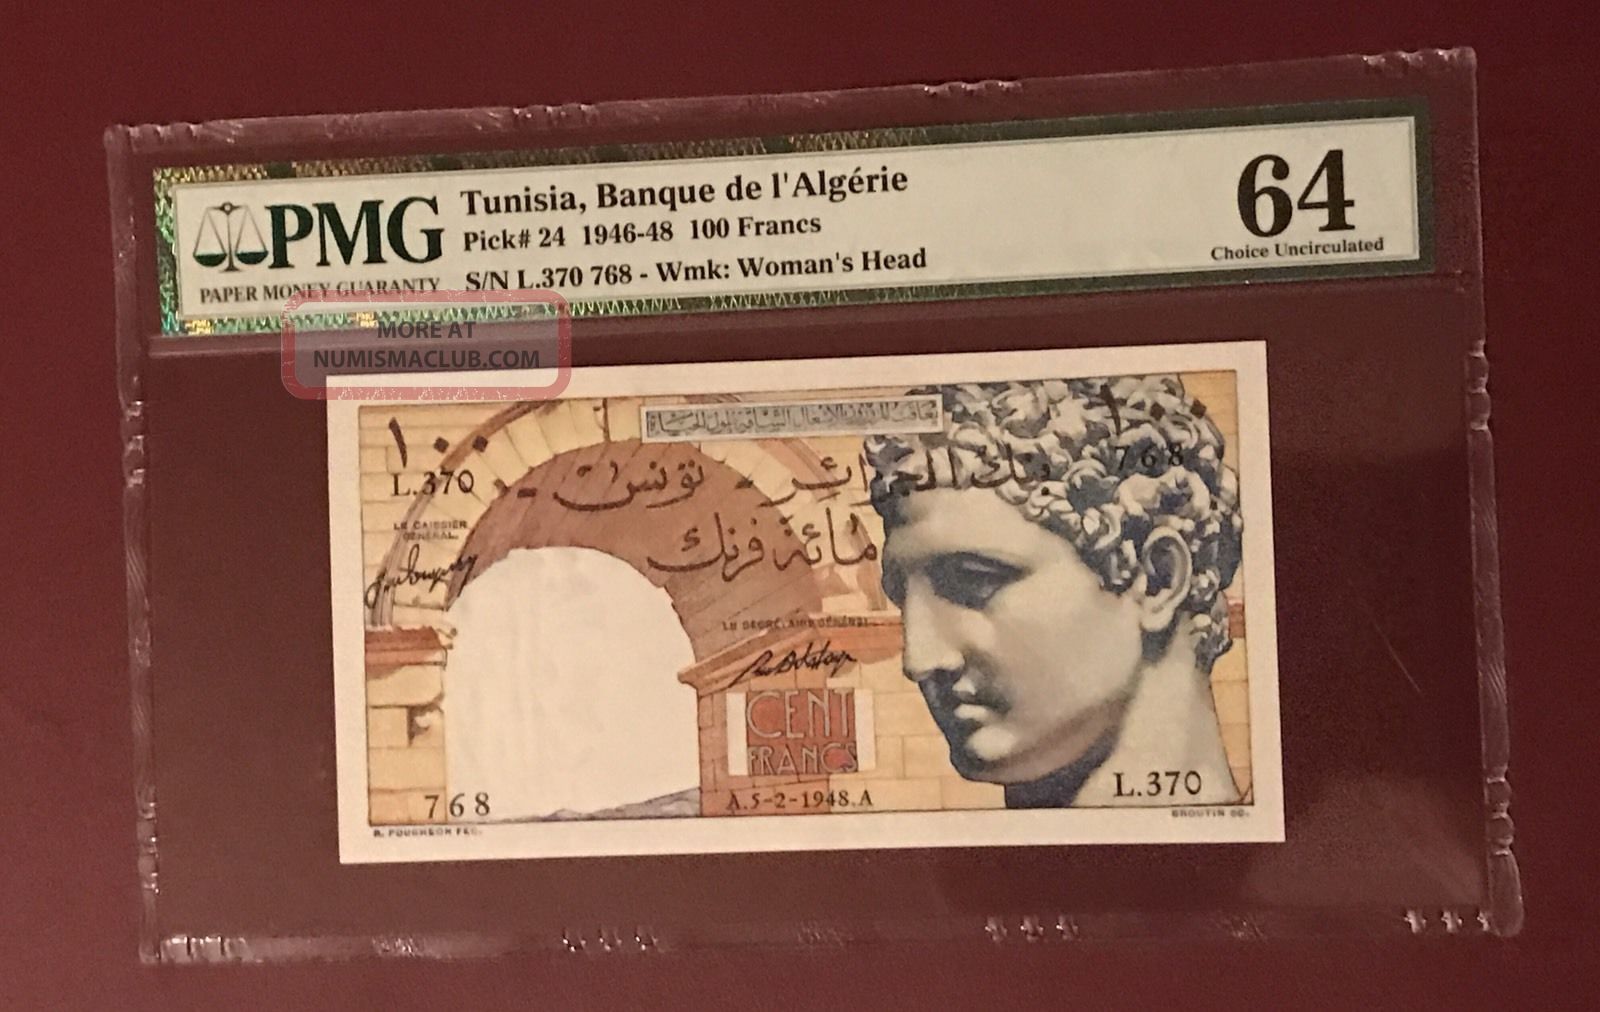 Algeria Algérie Tunisia 100 Franc Bank Note 1948 Pmg 64 Unc Highest Grade Known Europe photo